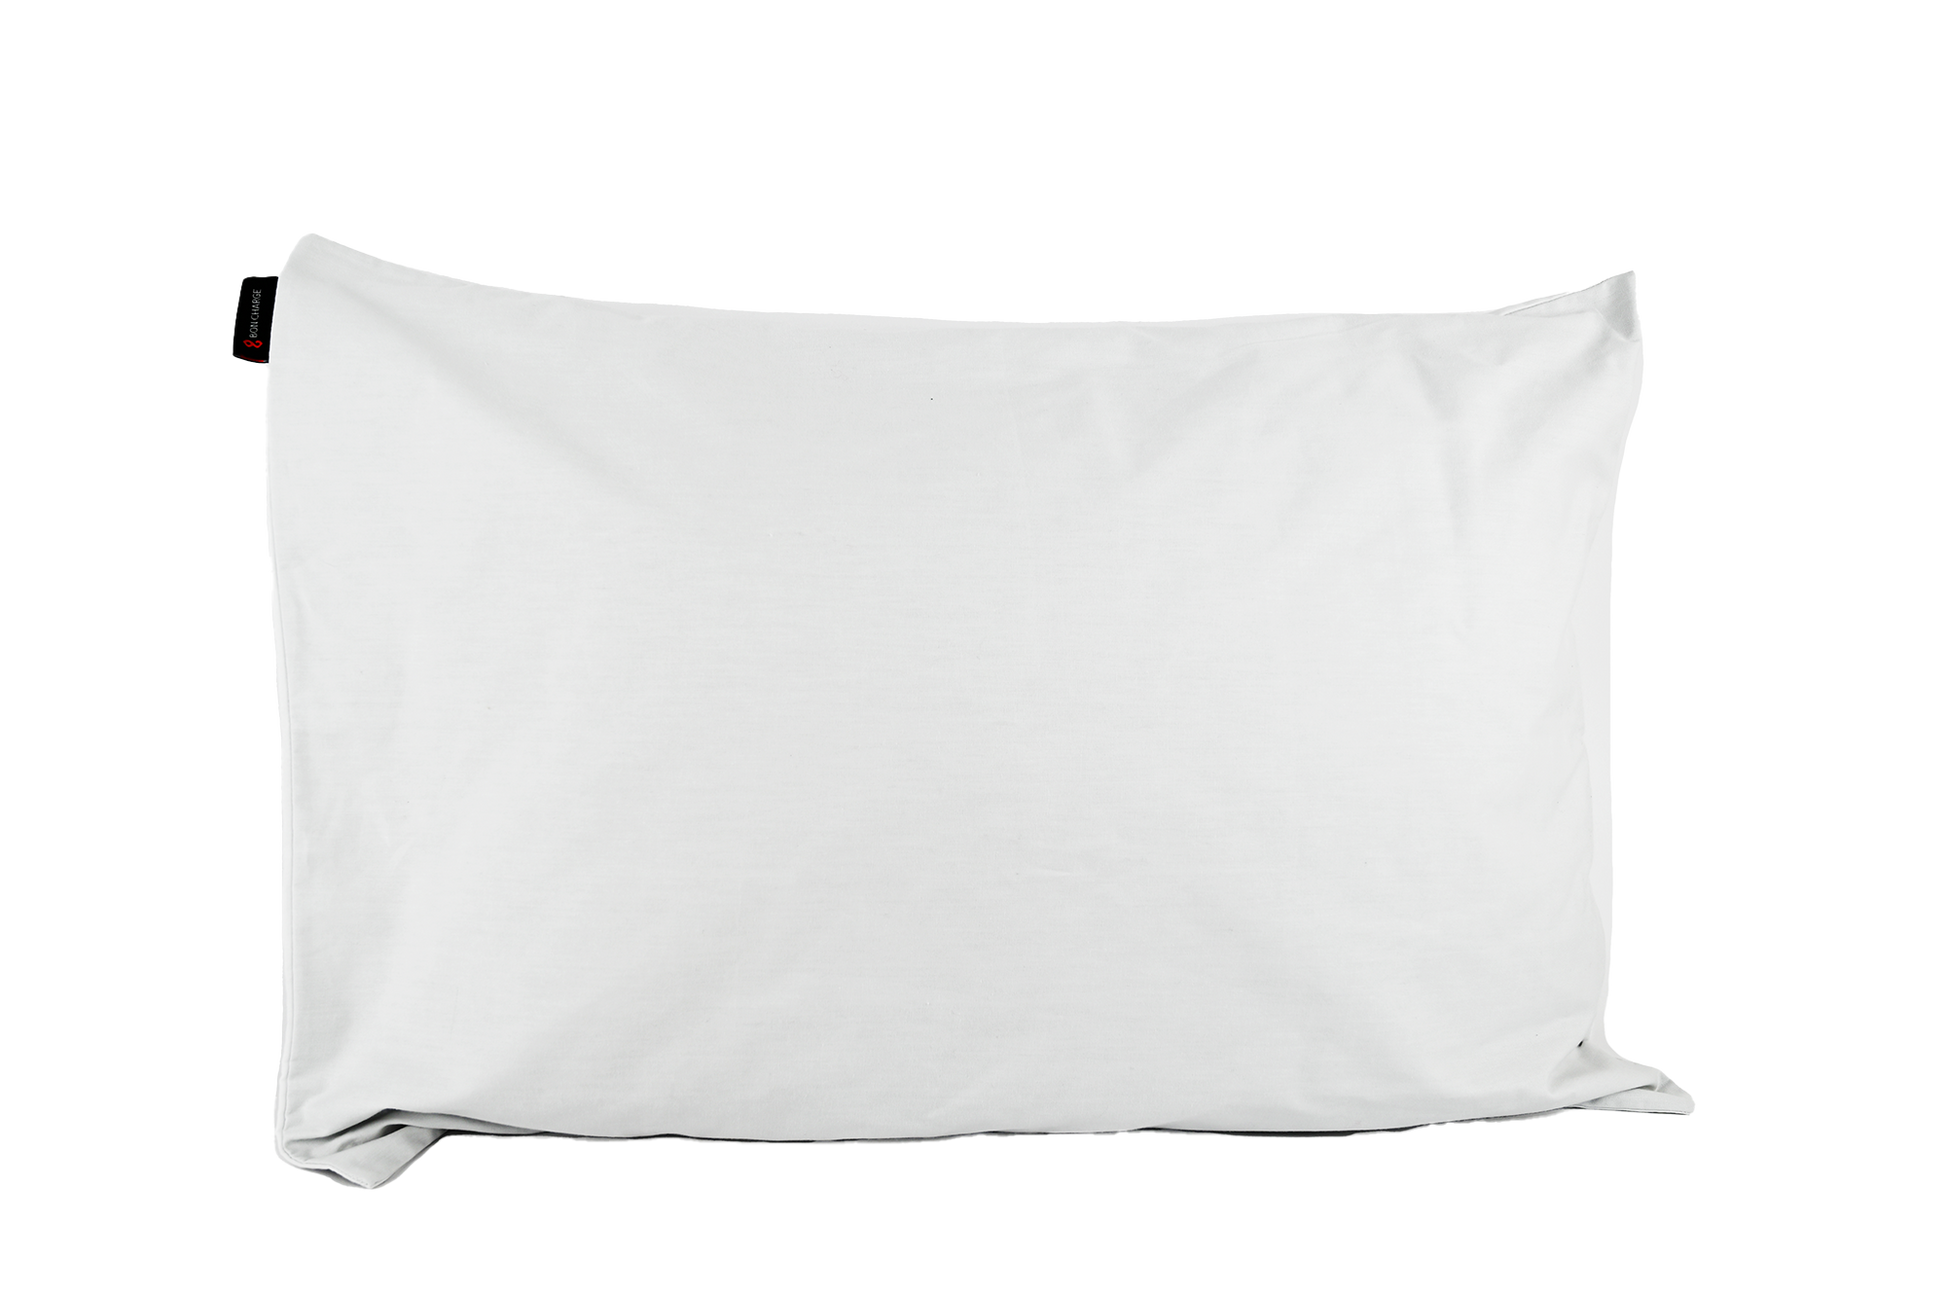 Classic Mega Size Bed Blanket  Organic Cotton, EMF Protection,RF Shie